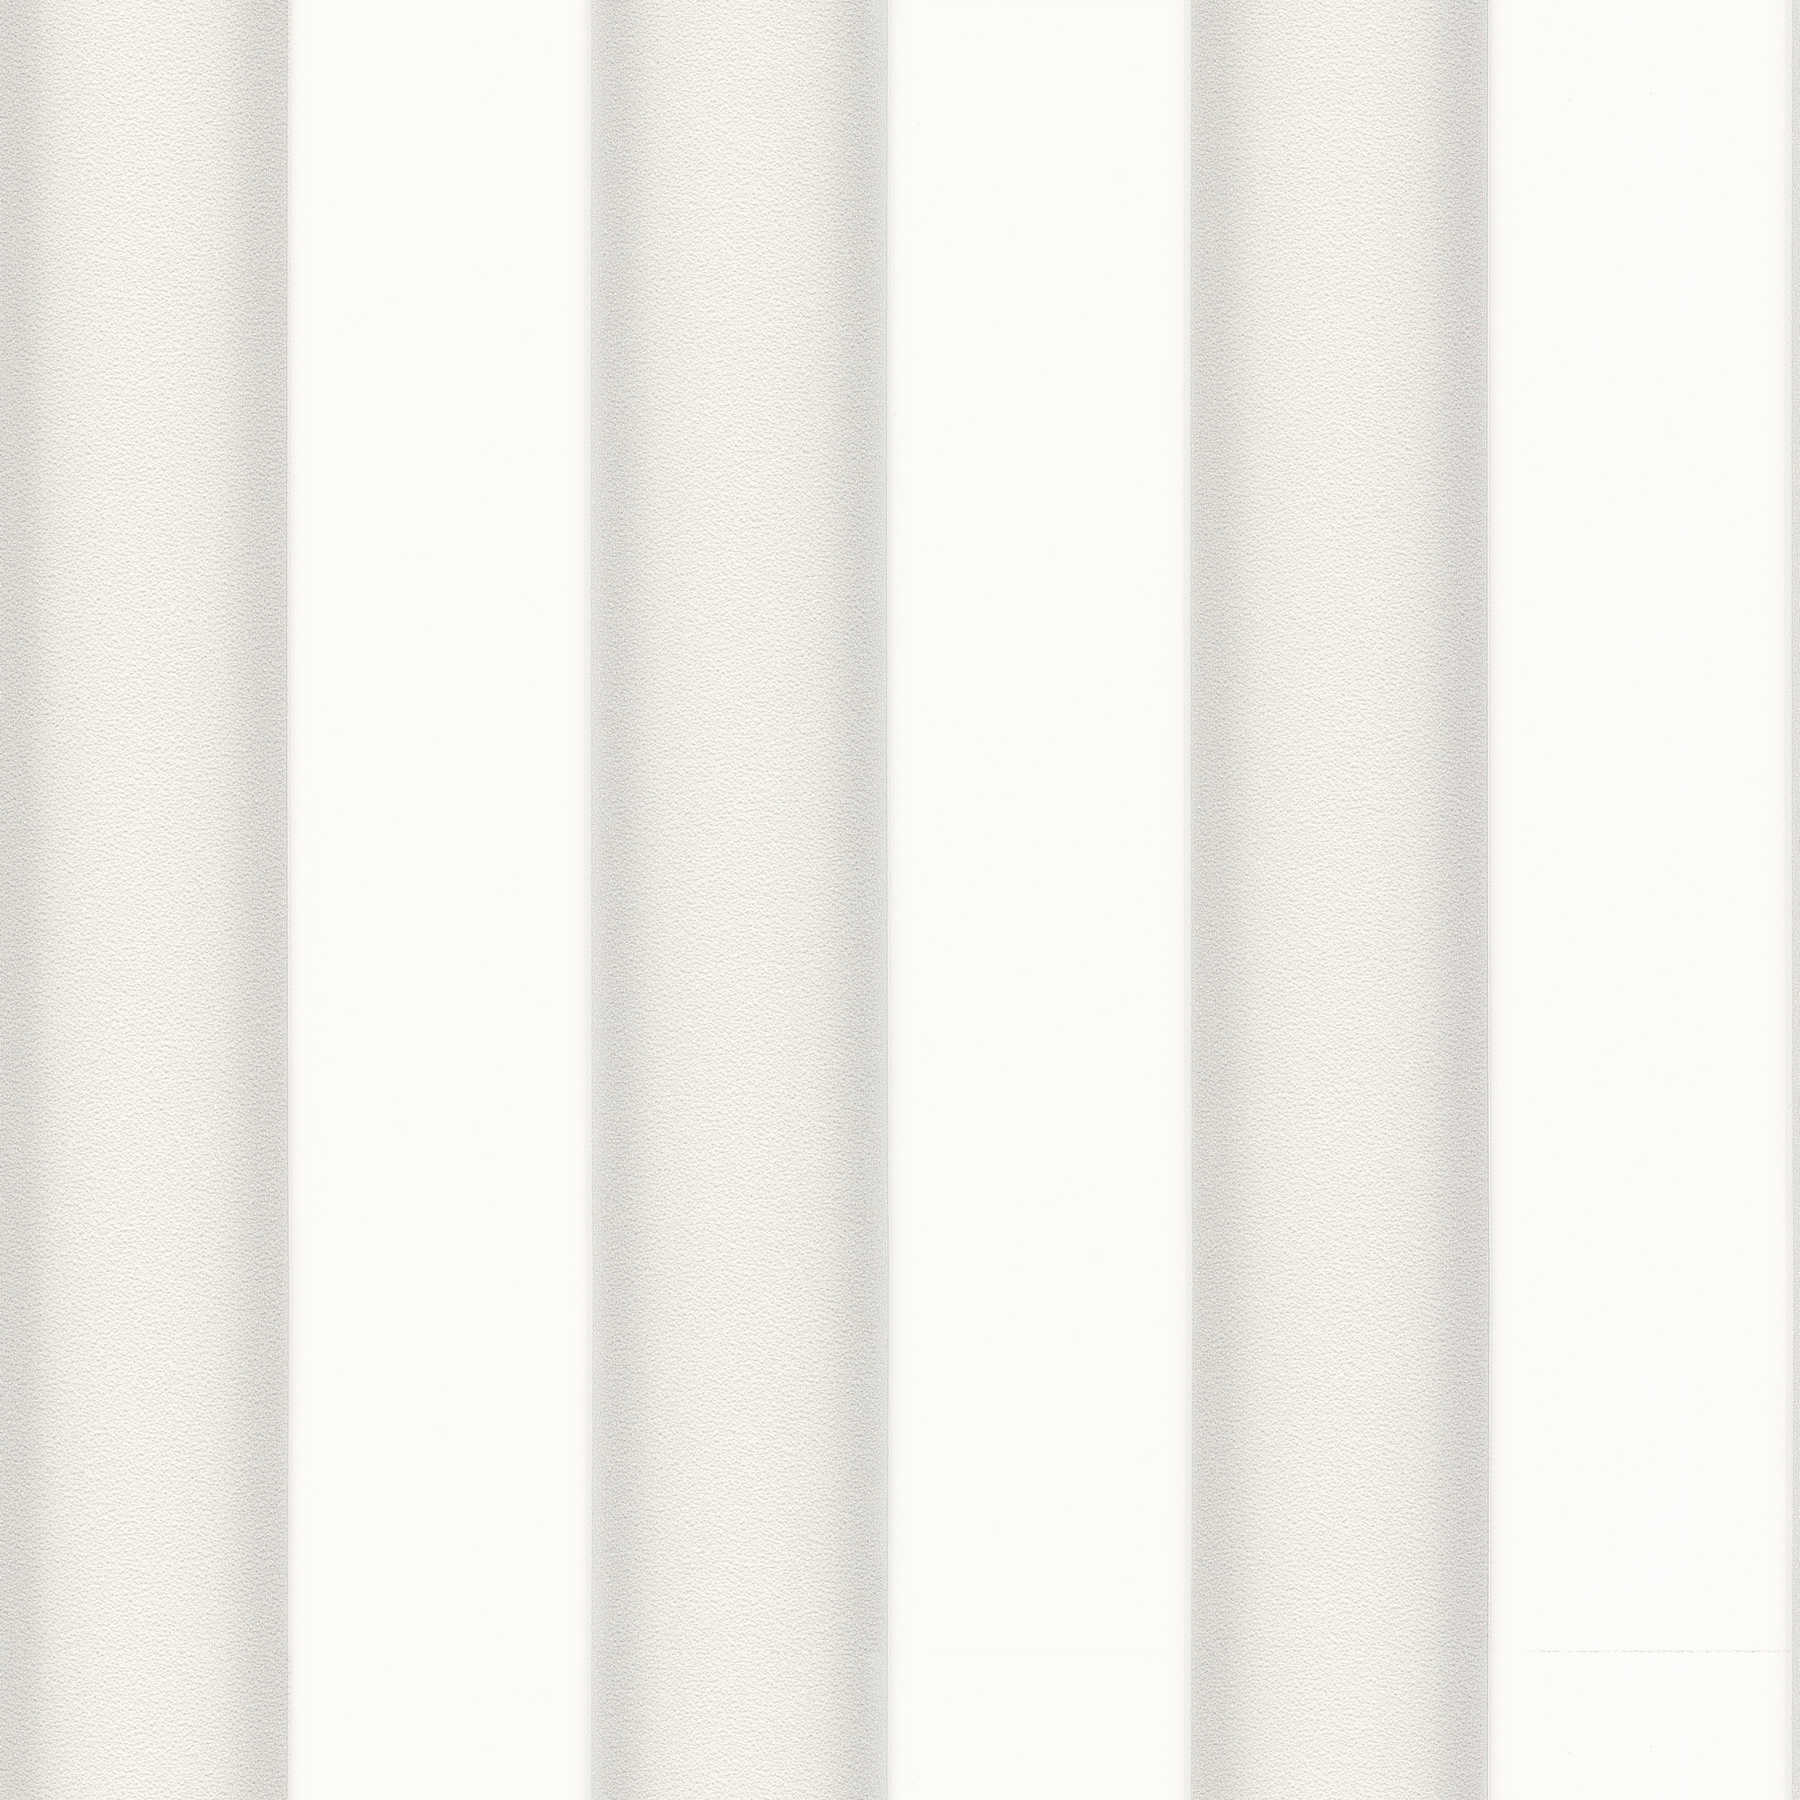 Metallic wallpaper with plastic stripe pattern - grey, white
